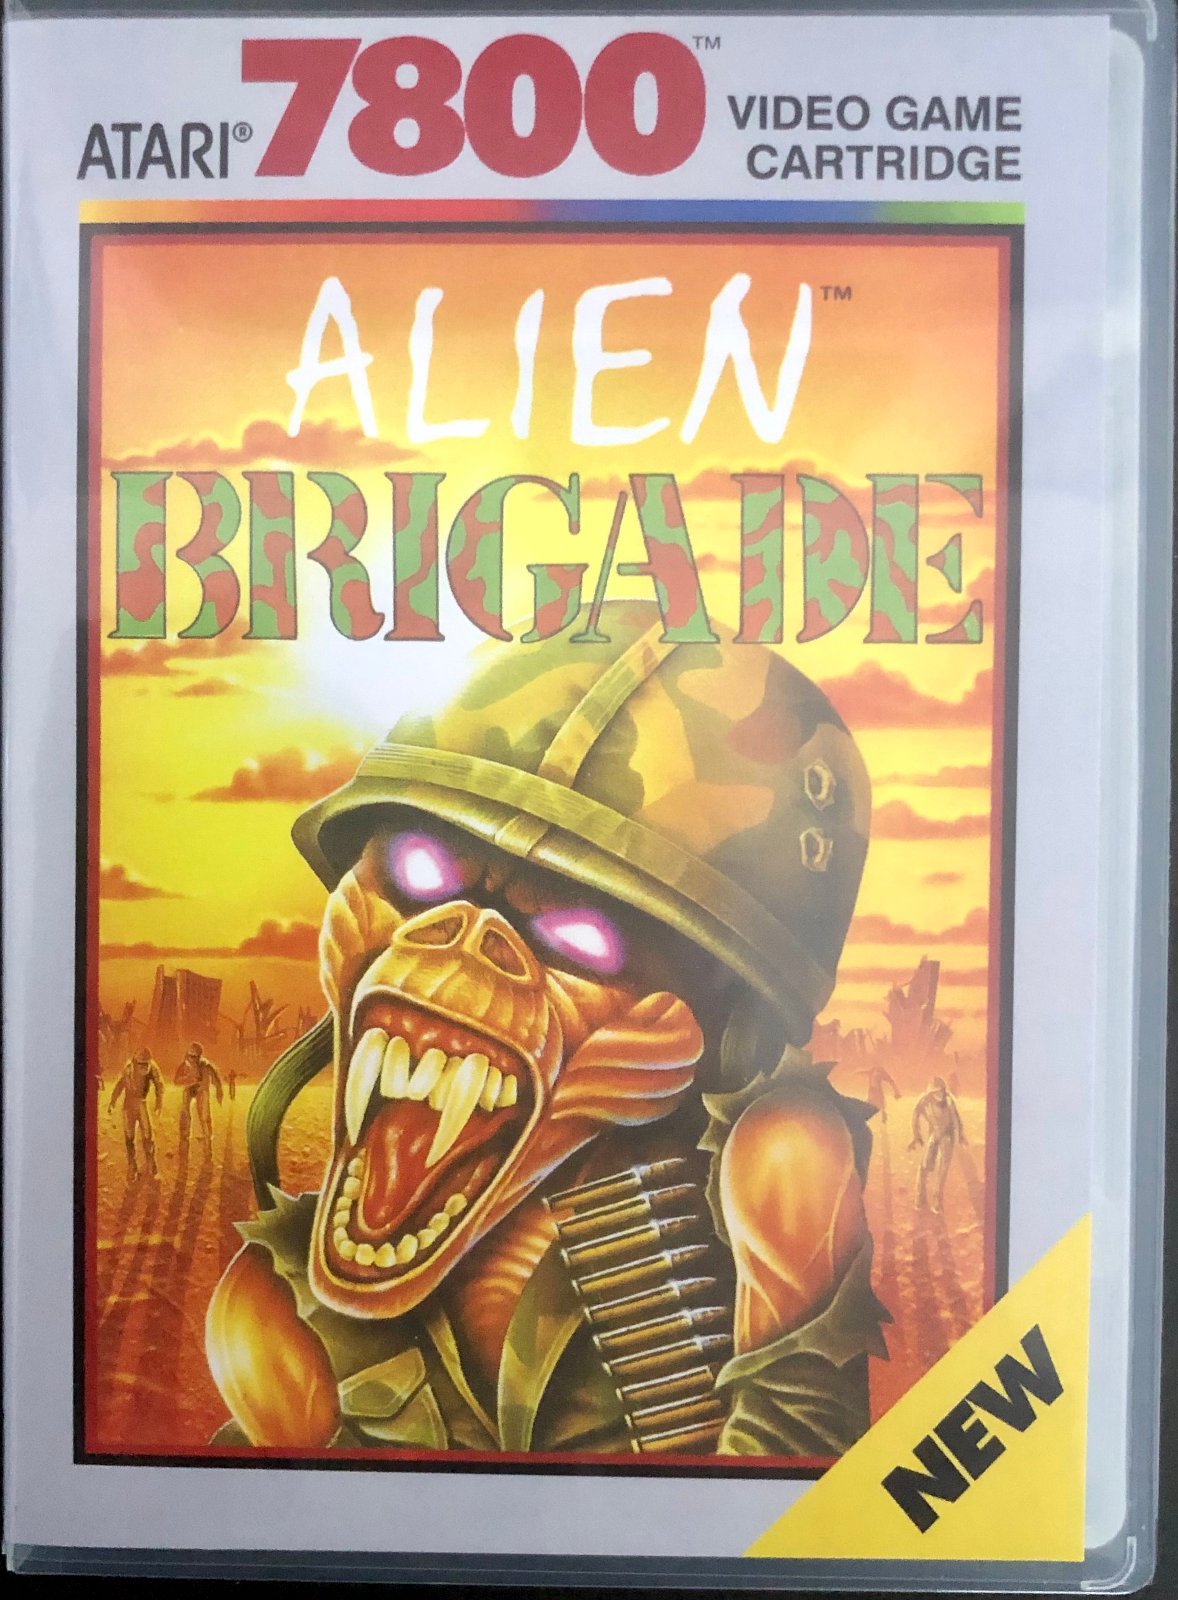 Alien Brigade für das Atari 7800. (Bild: Paul Hartmann)